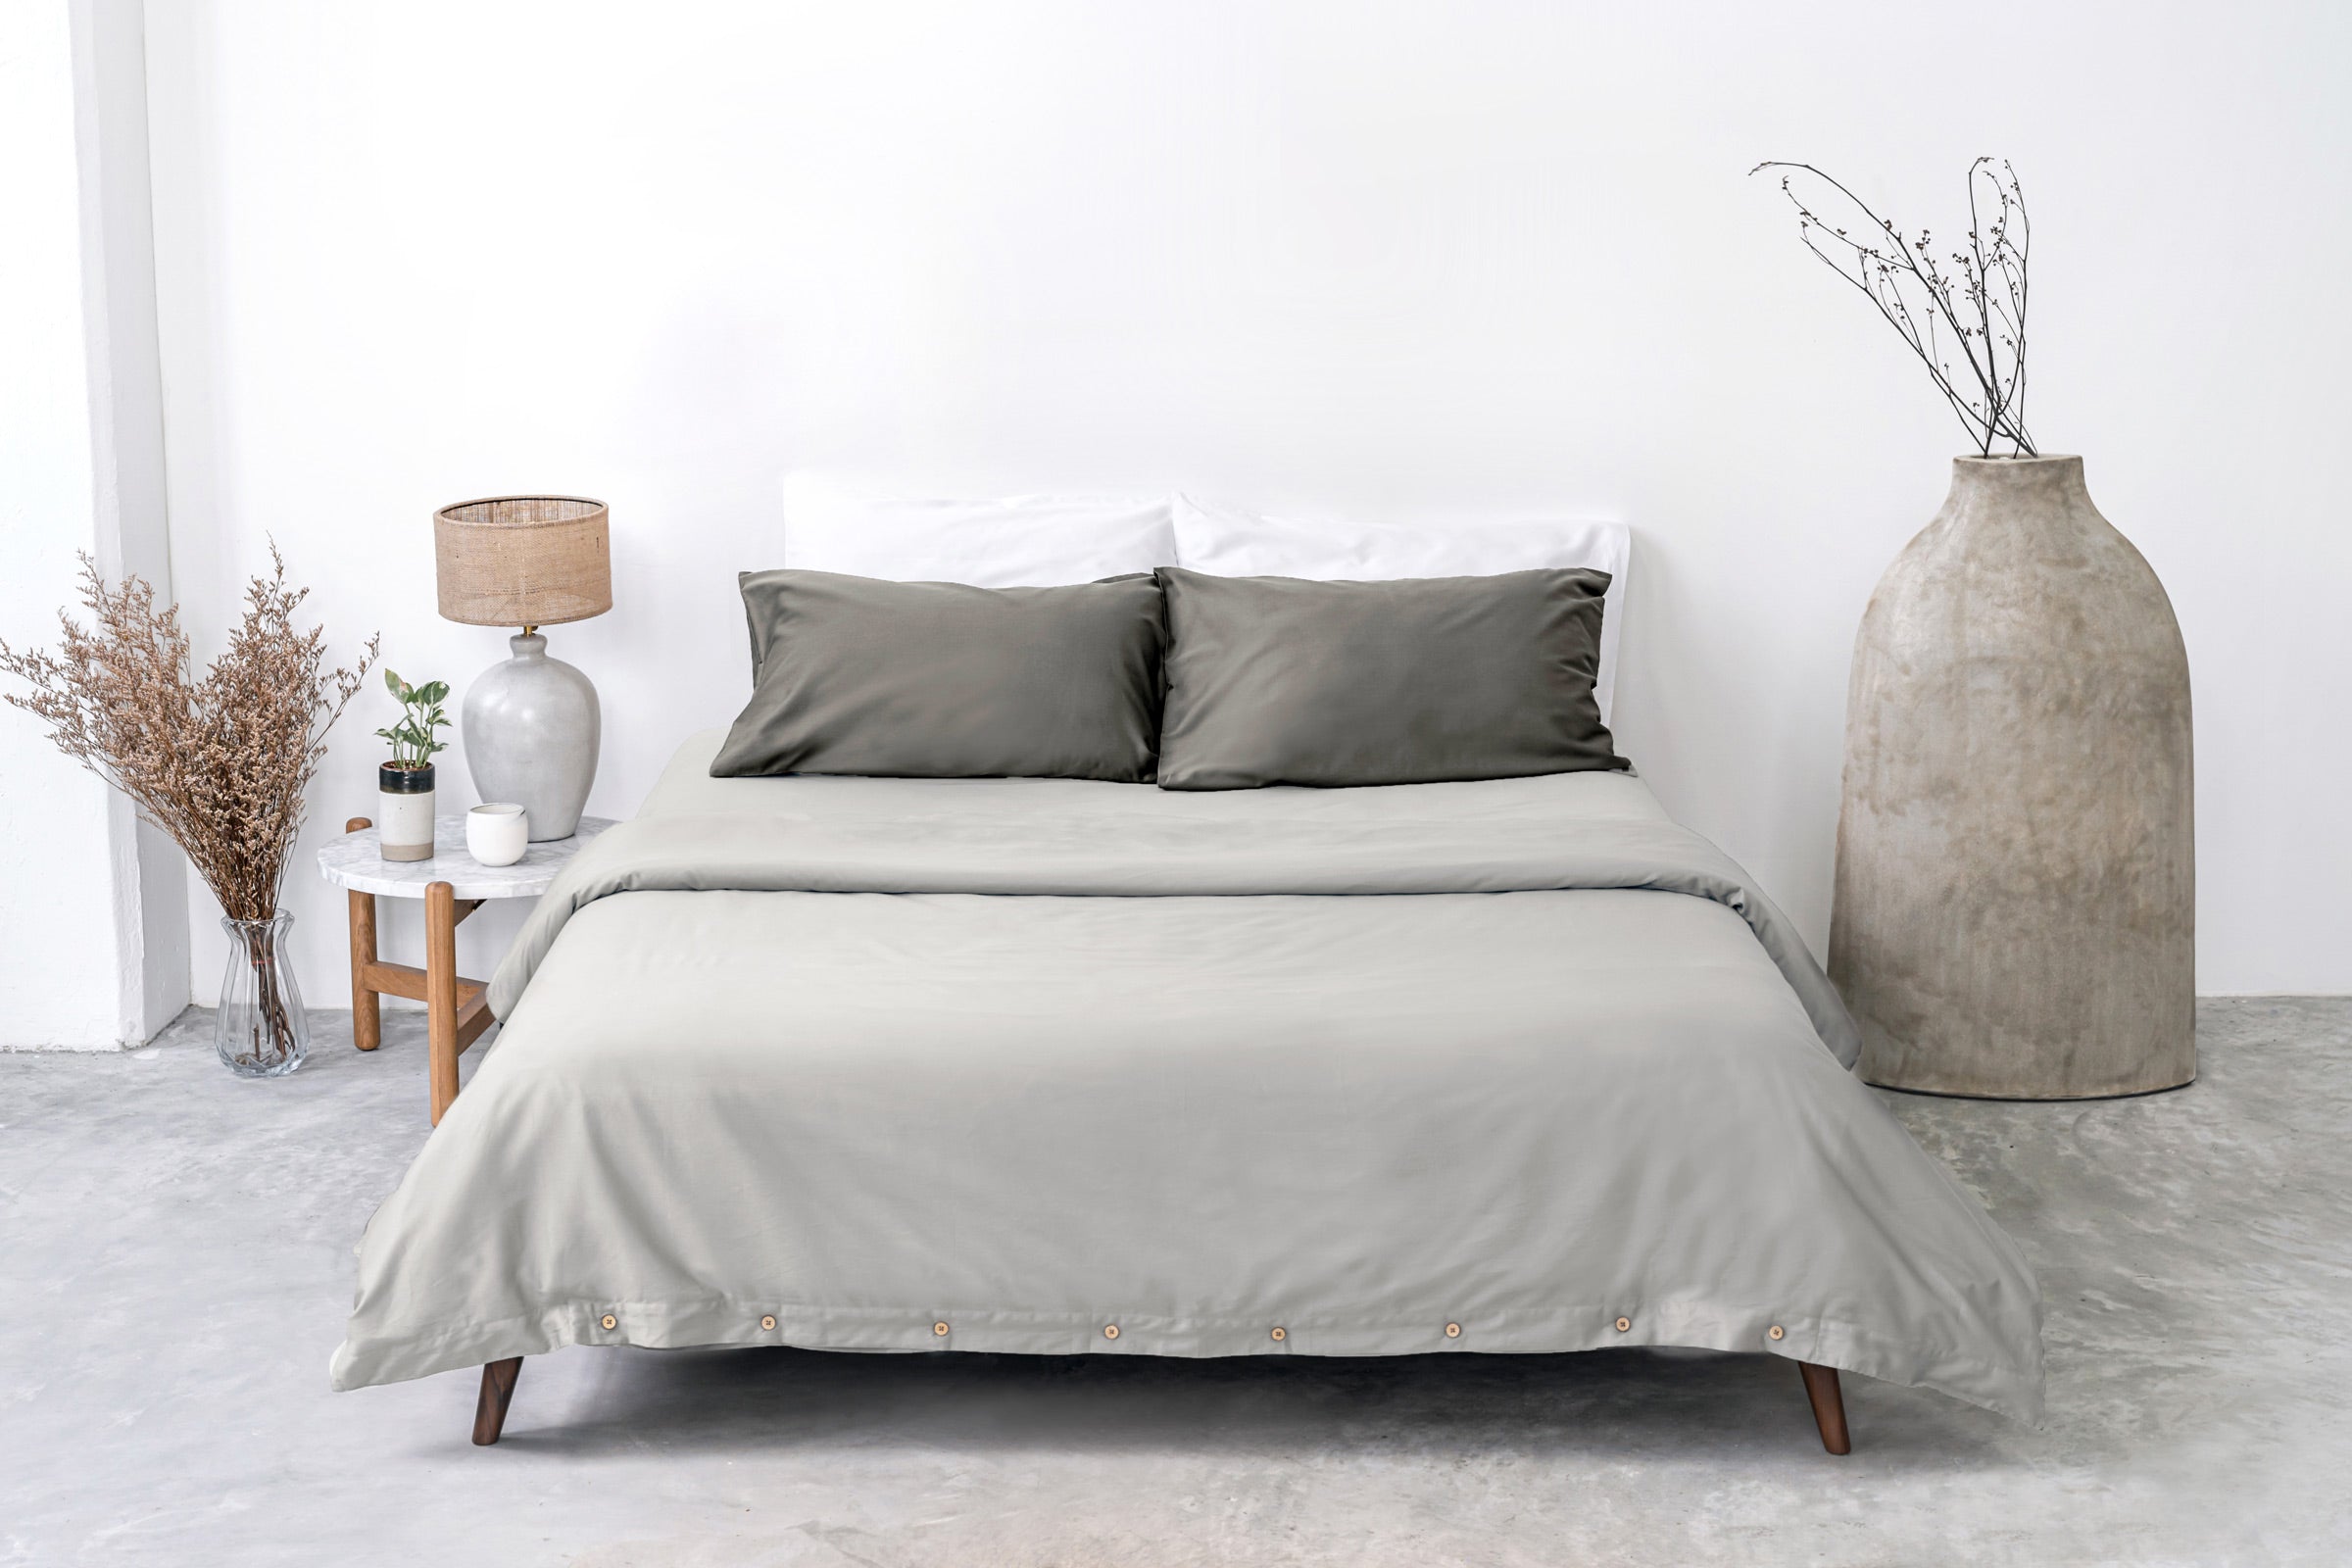 classic-stone-fitted-sheet-duvet-cover-pillowcase-pair-white-pillowcase-pair-by-sojao.jpg